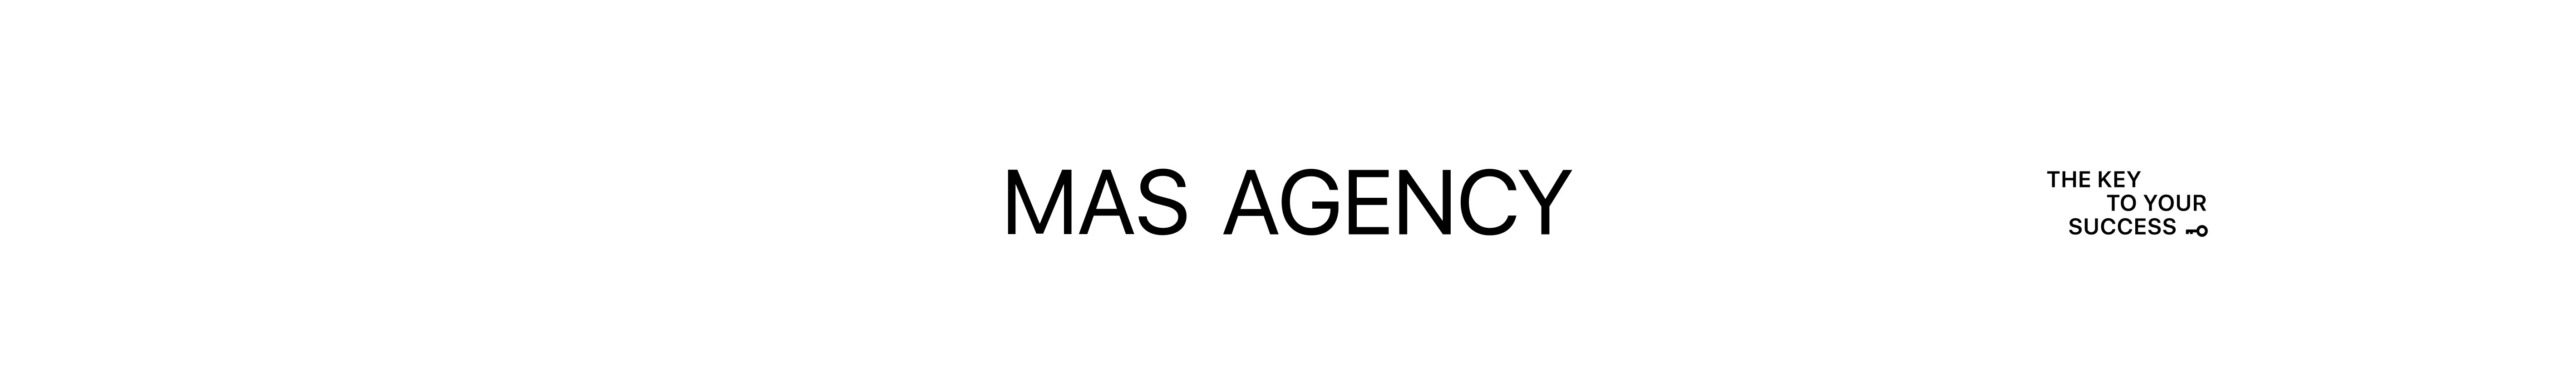 Mas Agency's profile banner